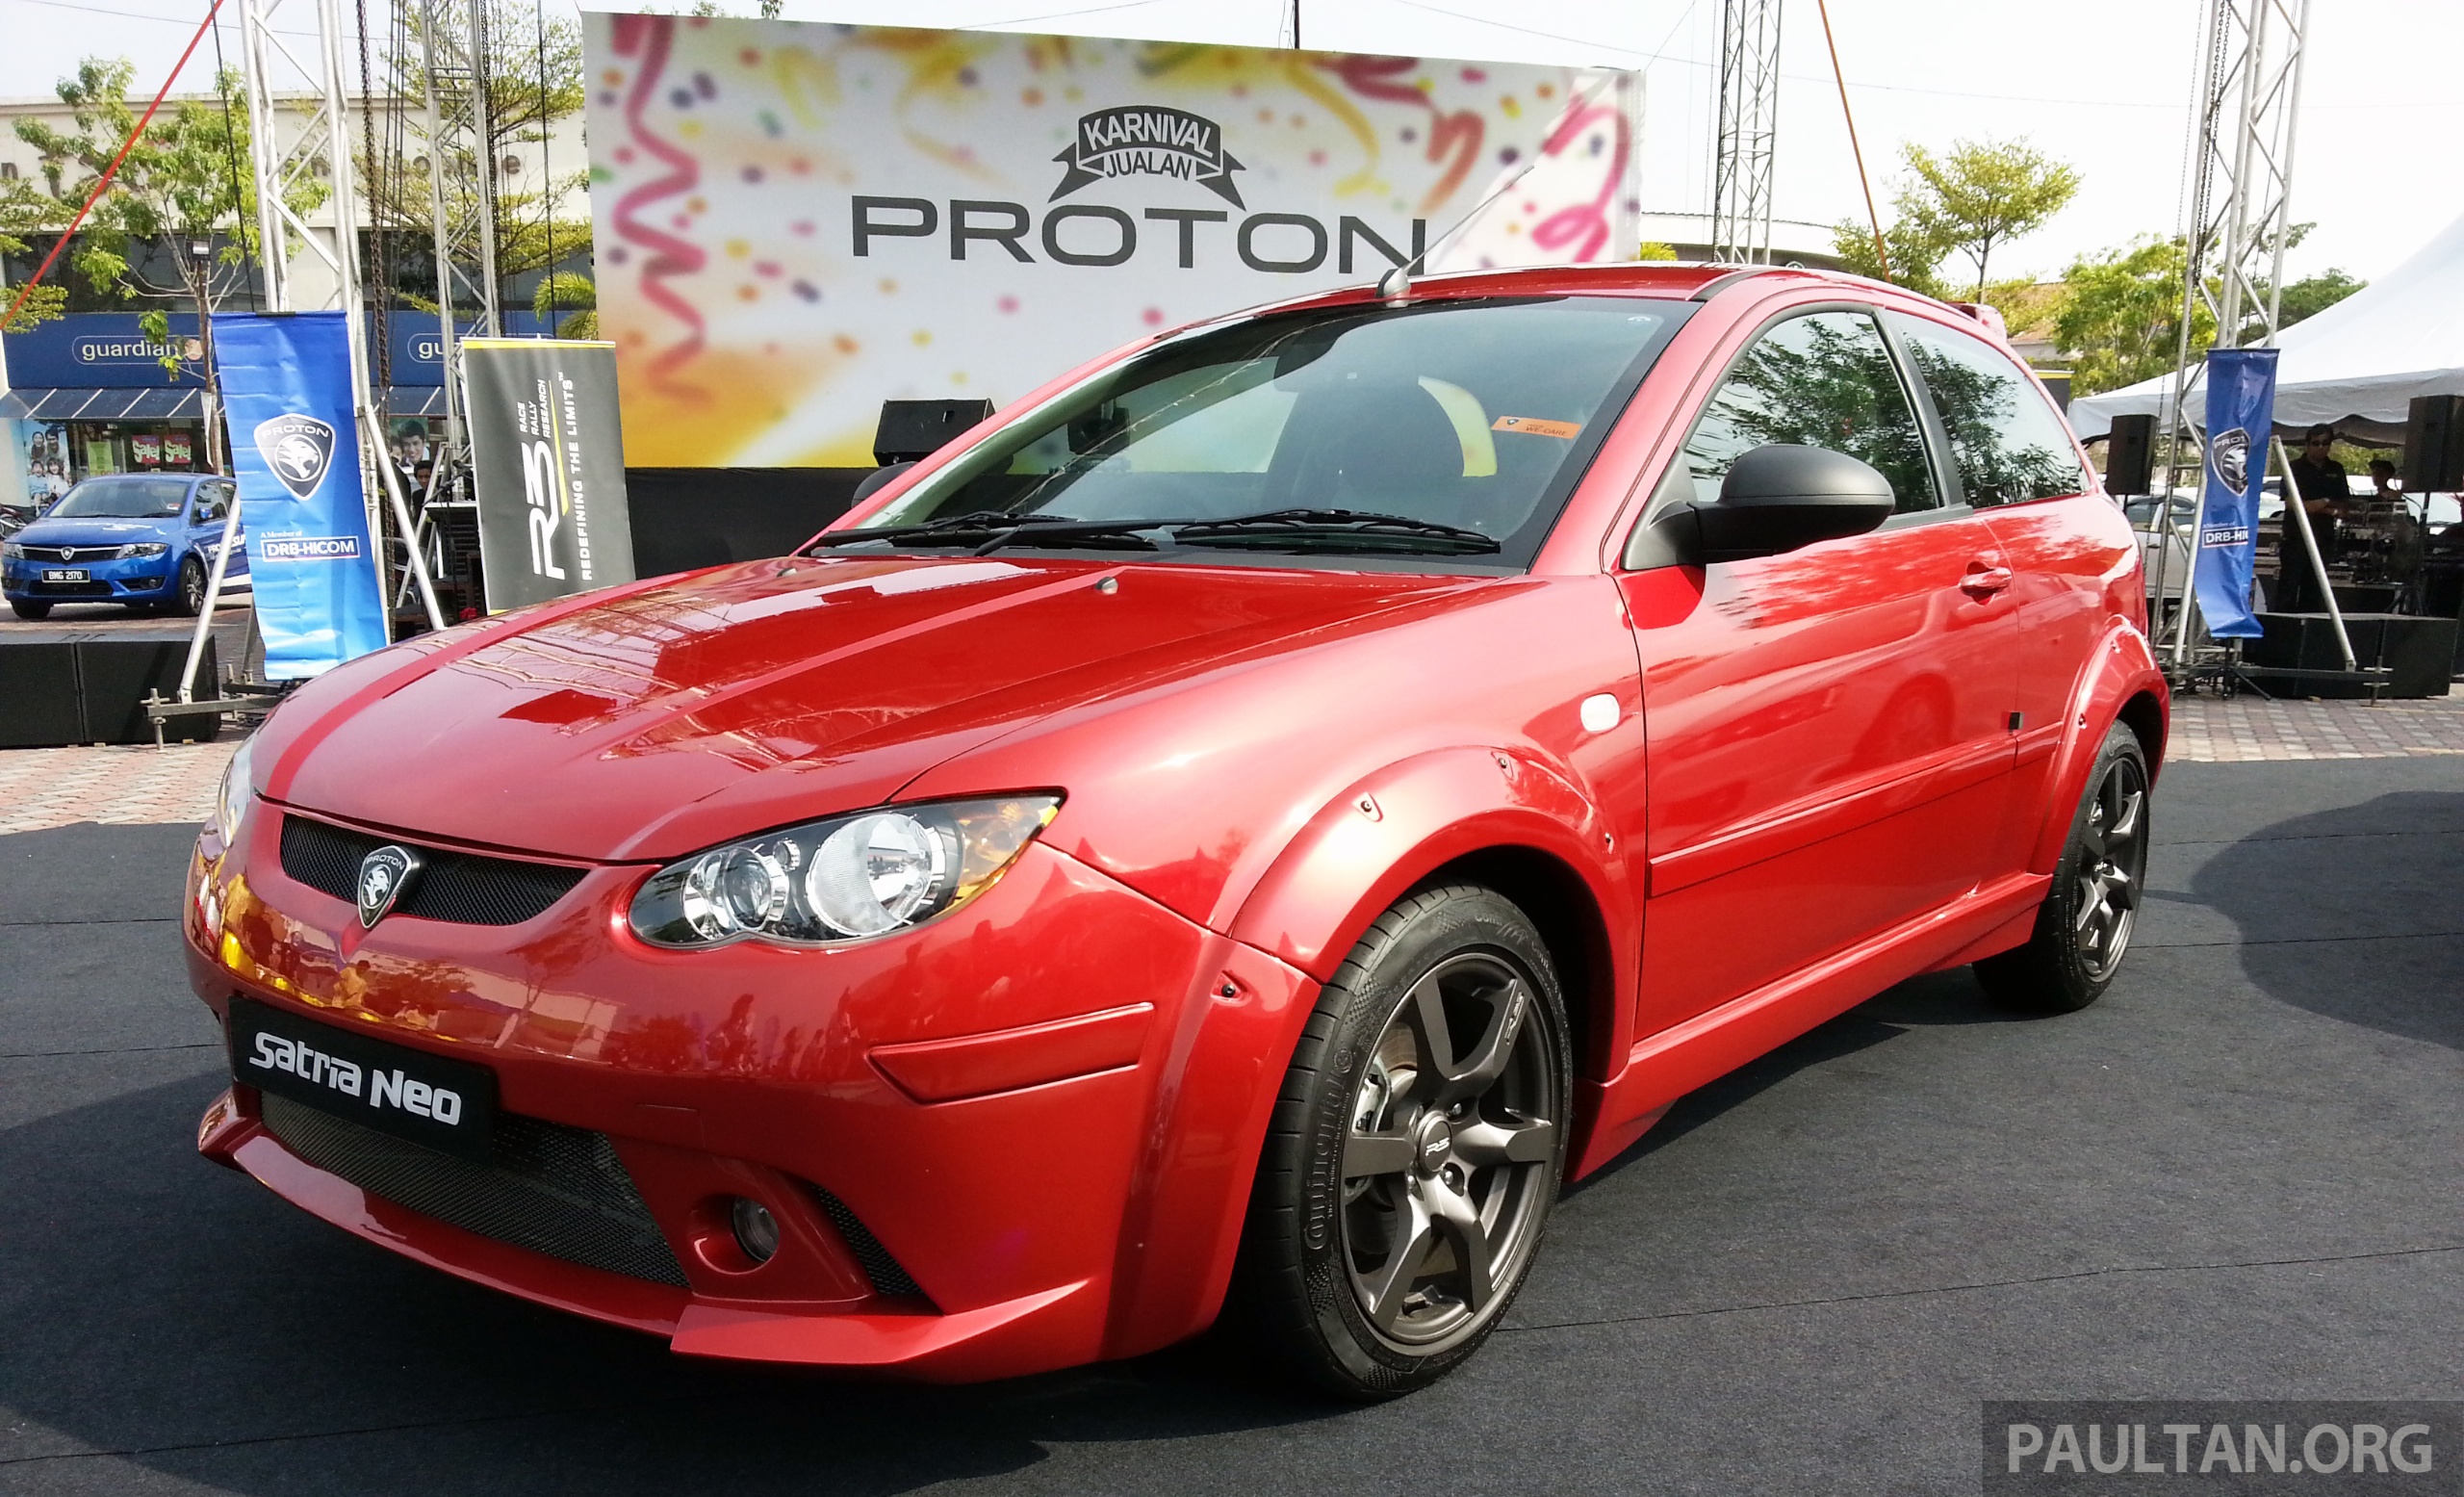 Proton Satria Neo - production to end this year